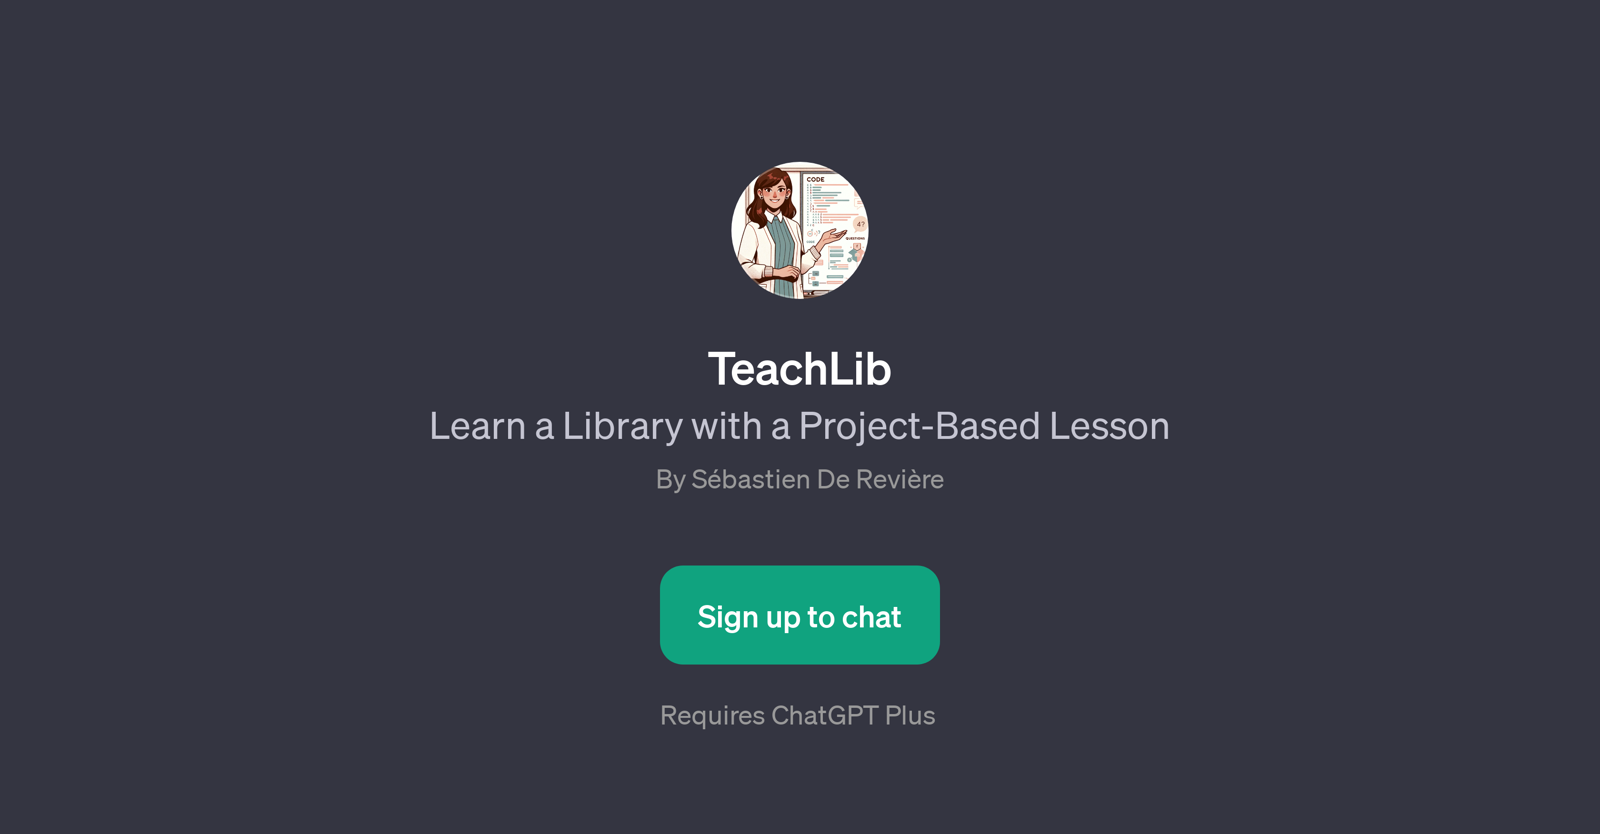 TeachLib website